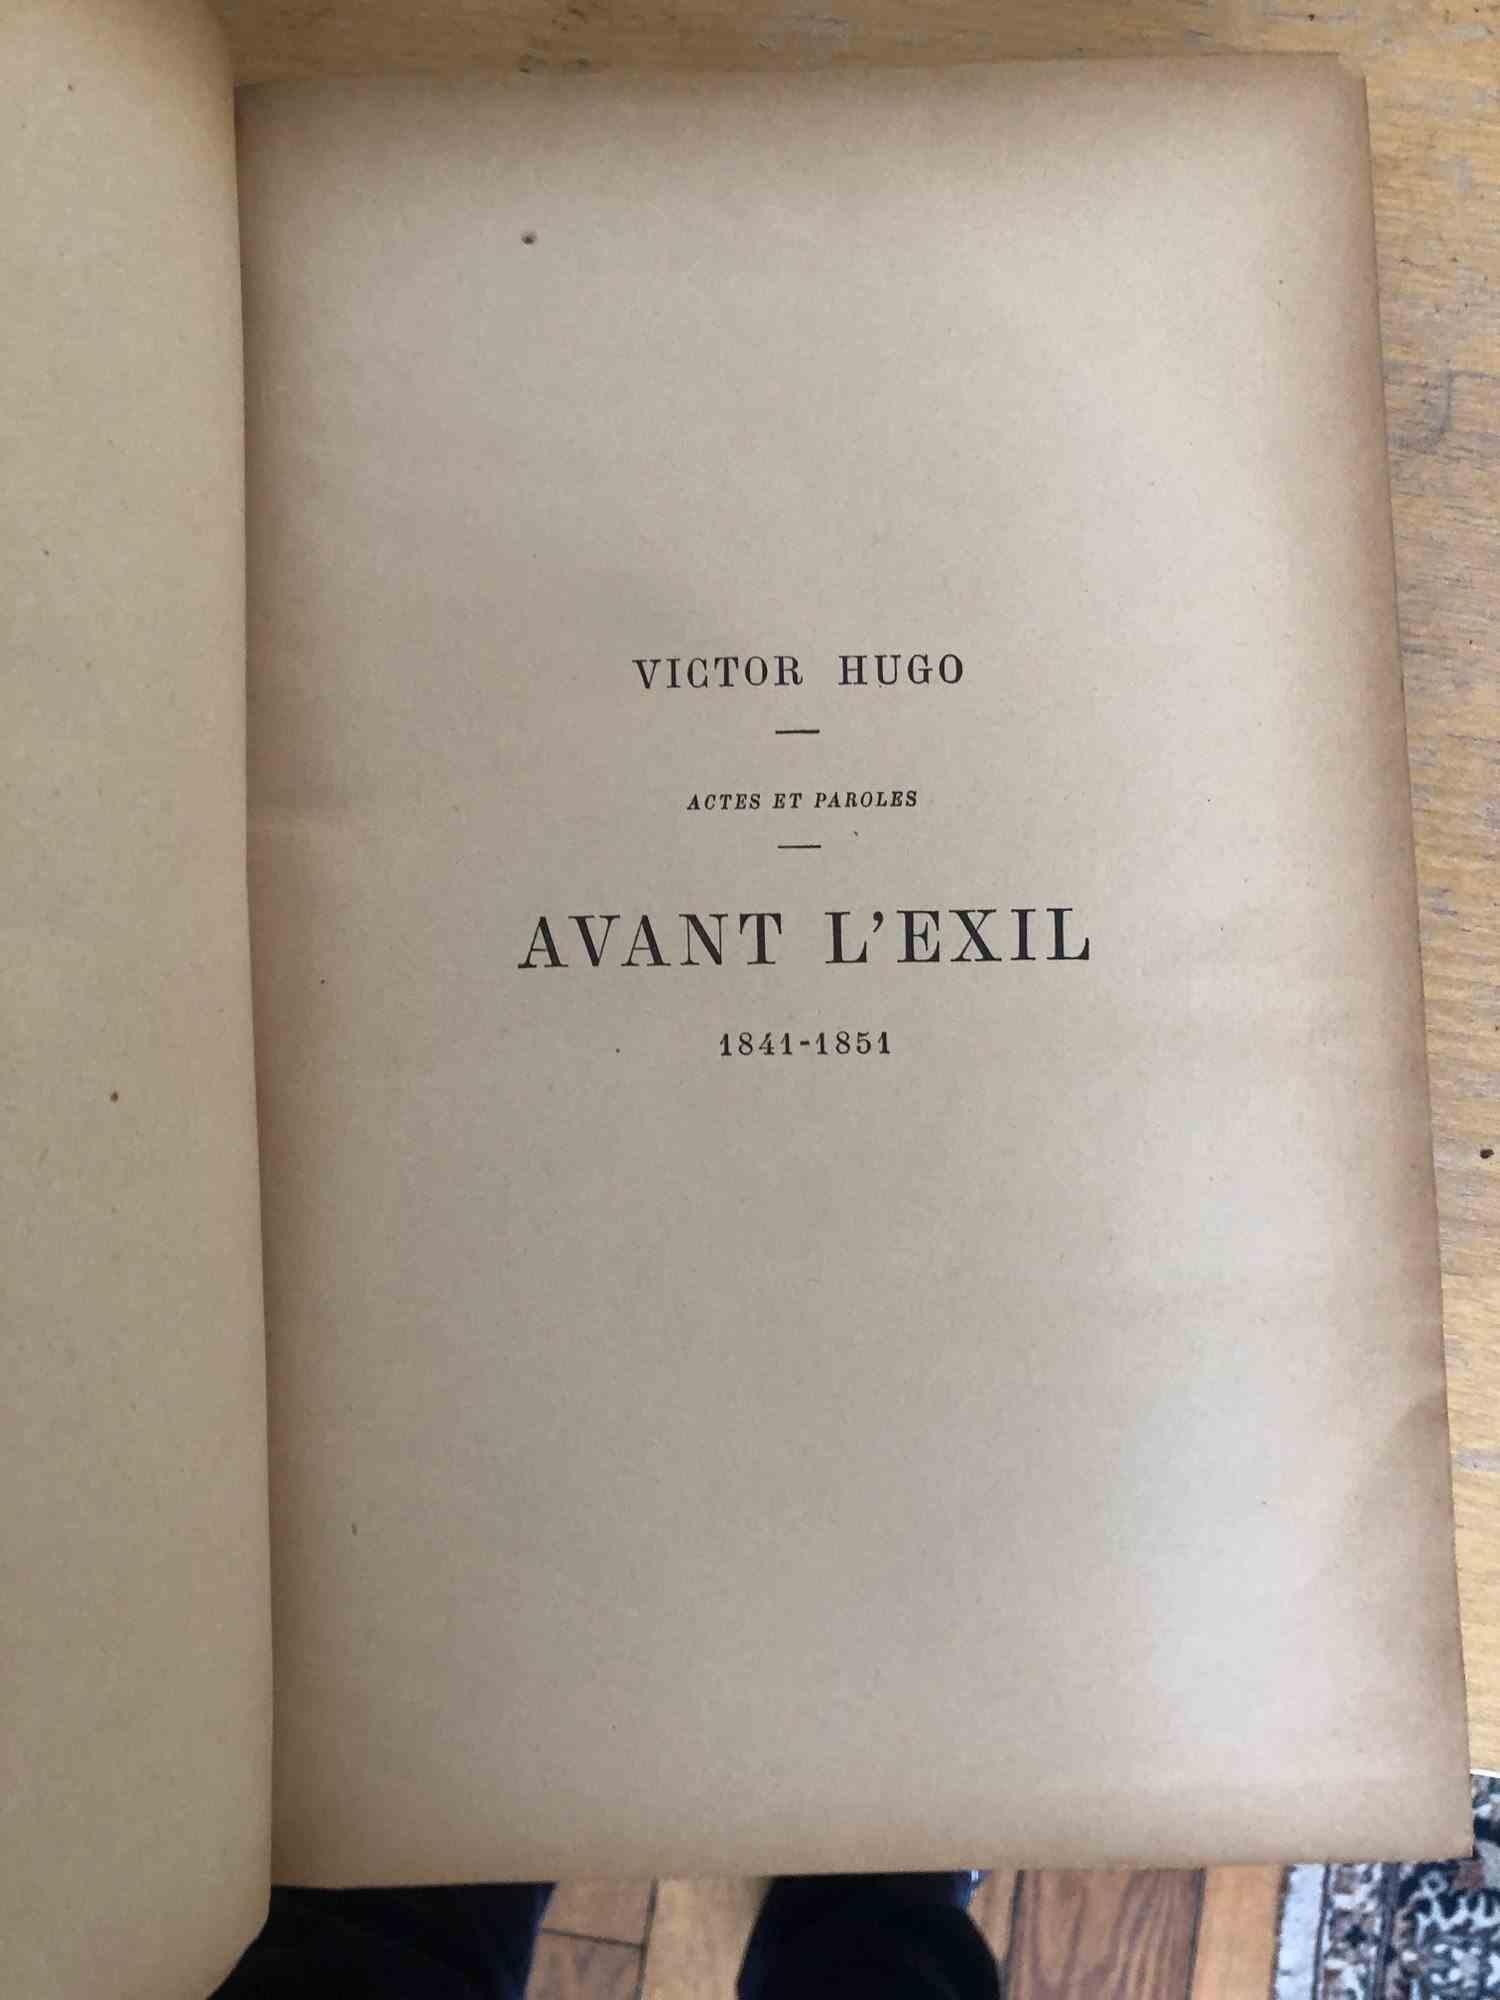 Oeuvres Complètes Illustrées - Rare Book by Victor Hugo - 1902 For Sale 7